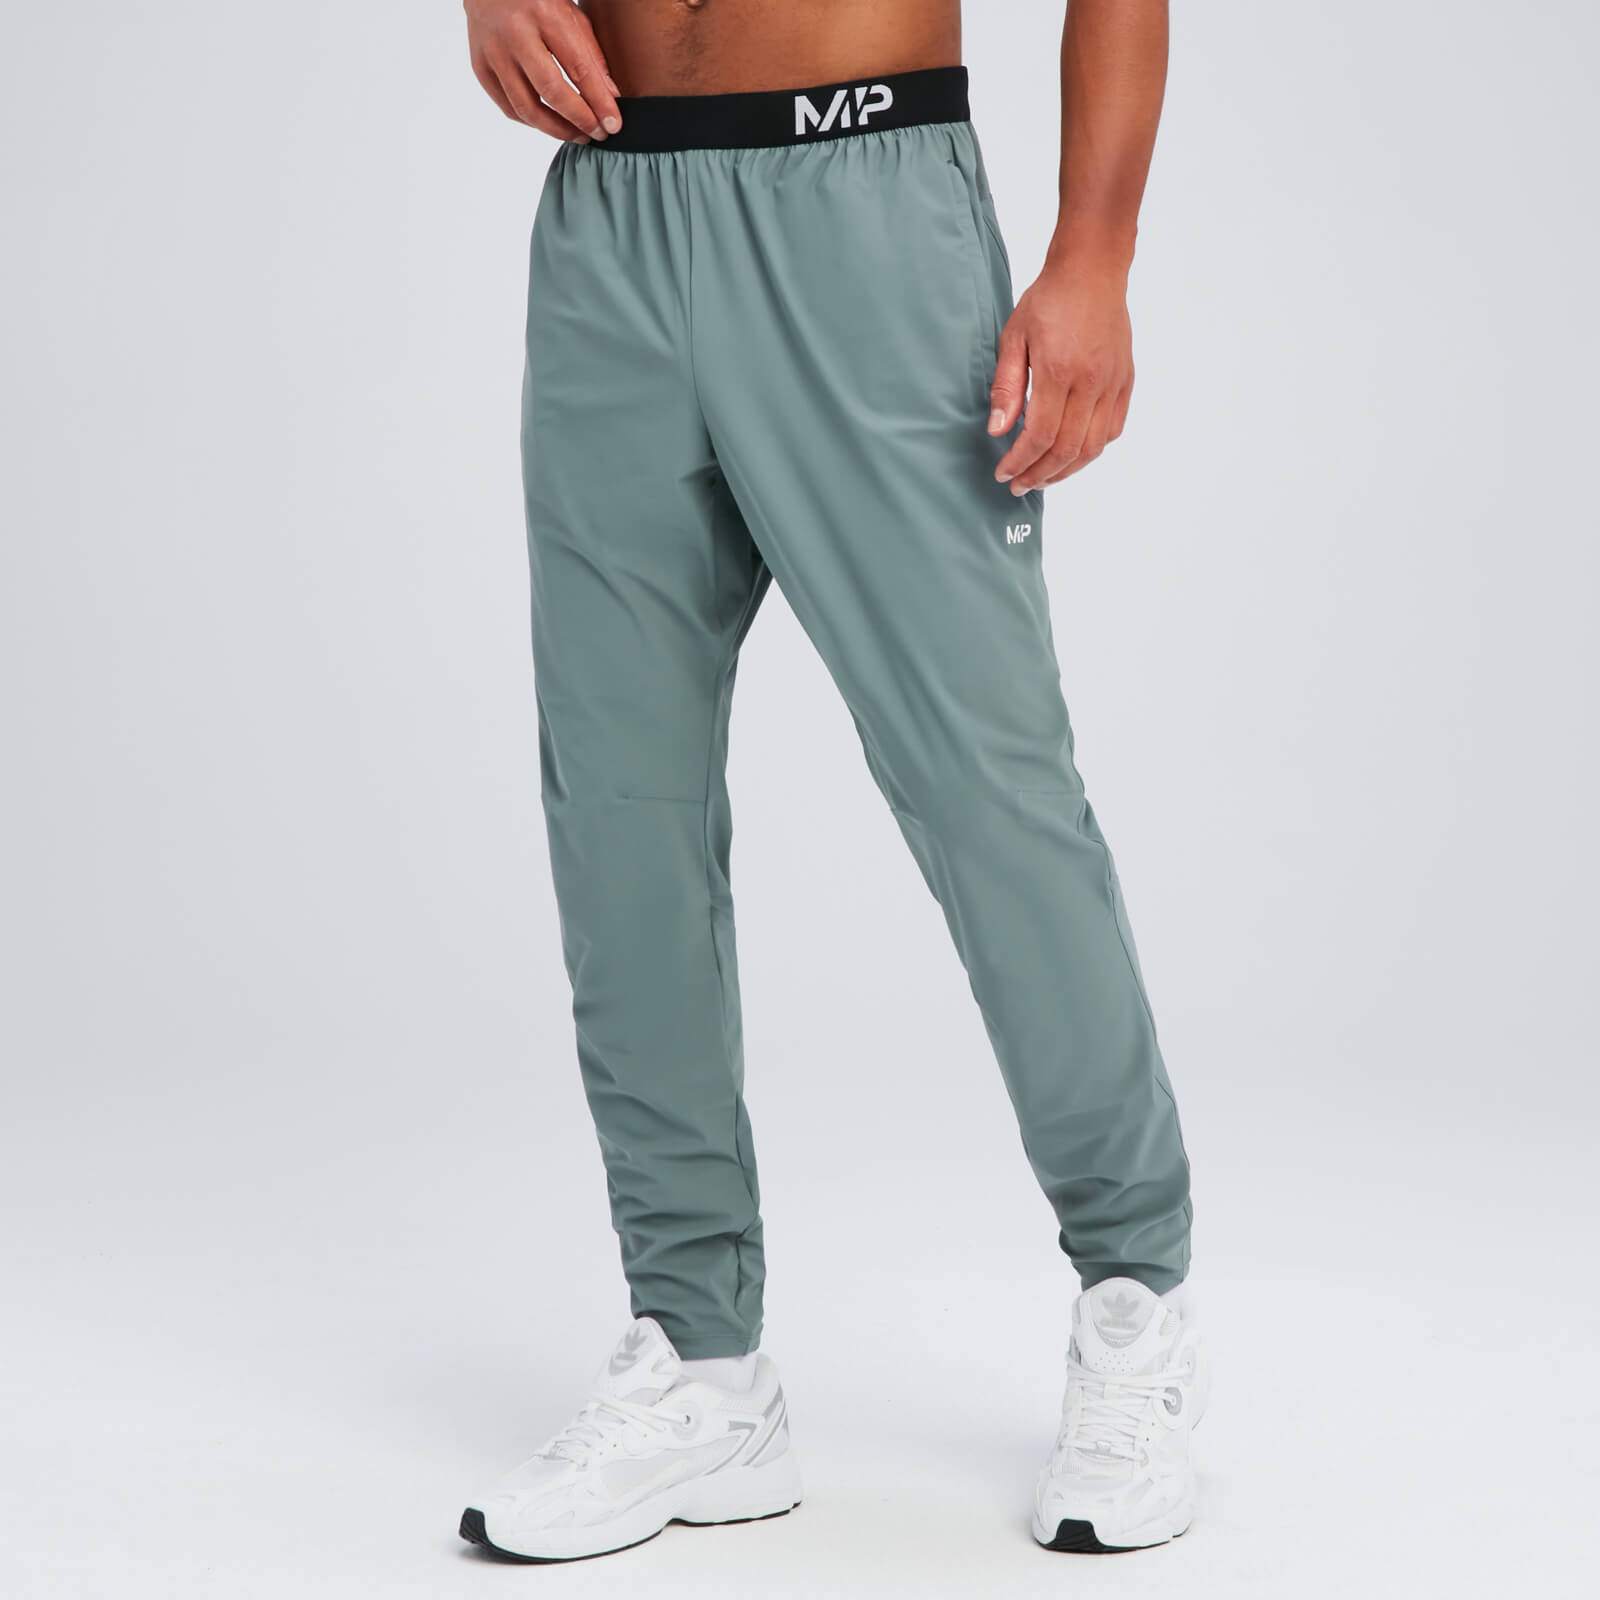 Tempo节奏系列男士运动裤 - 板岩灰 - XXXL product